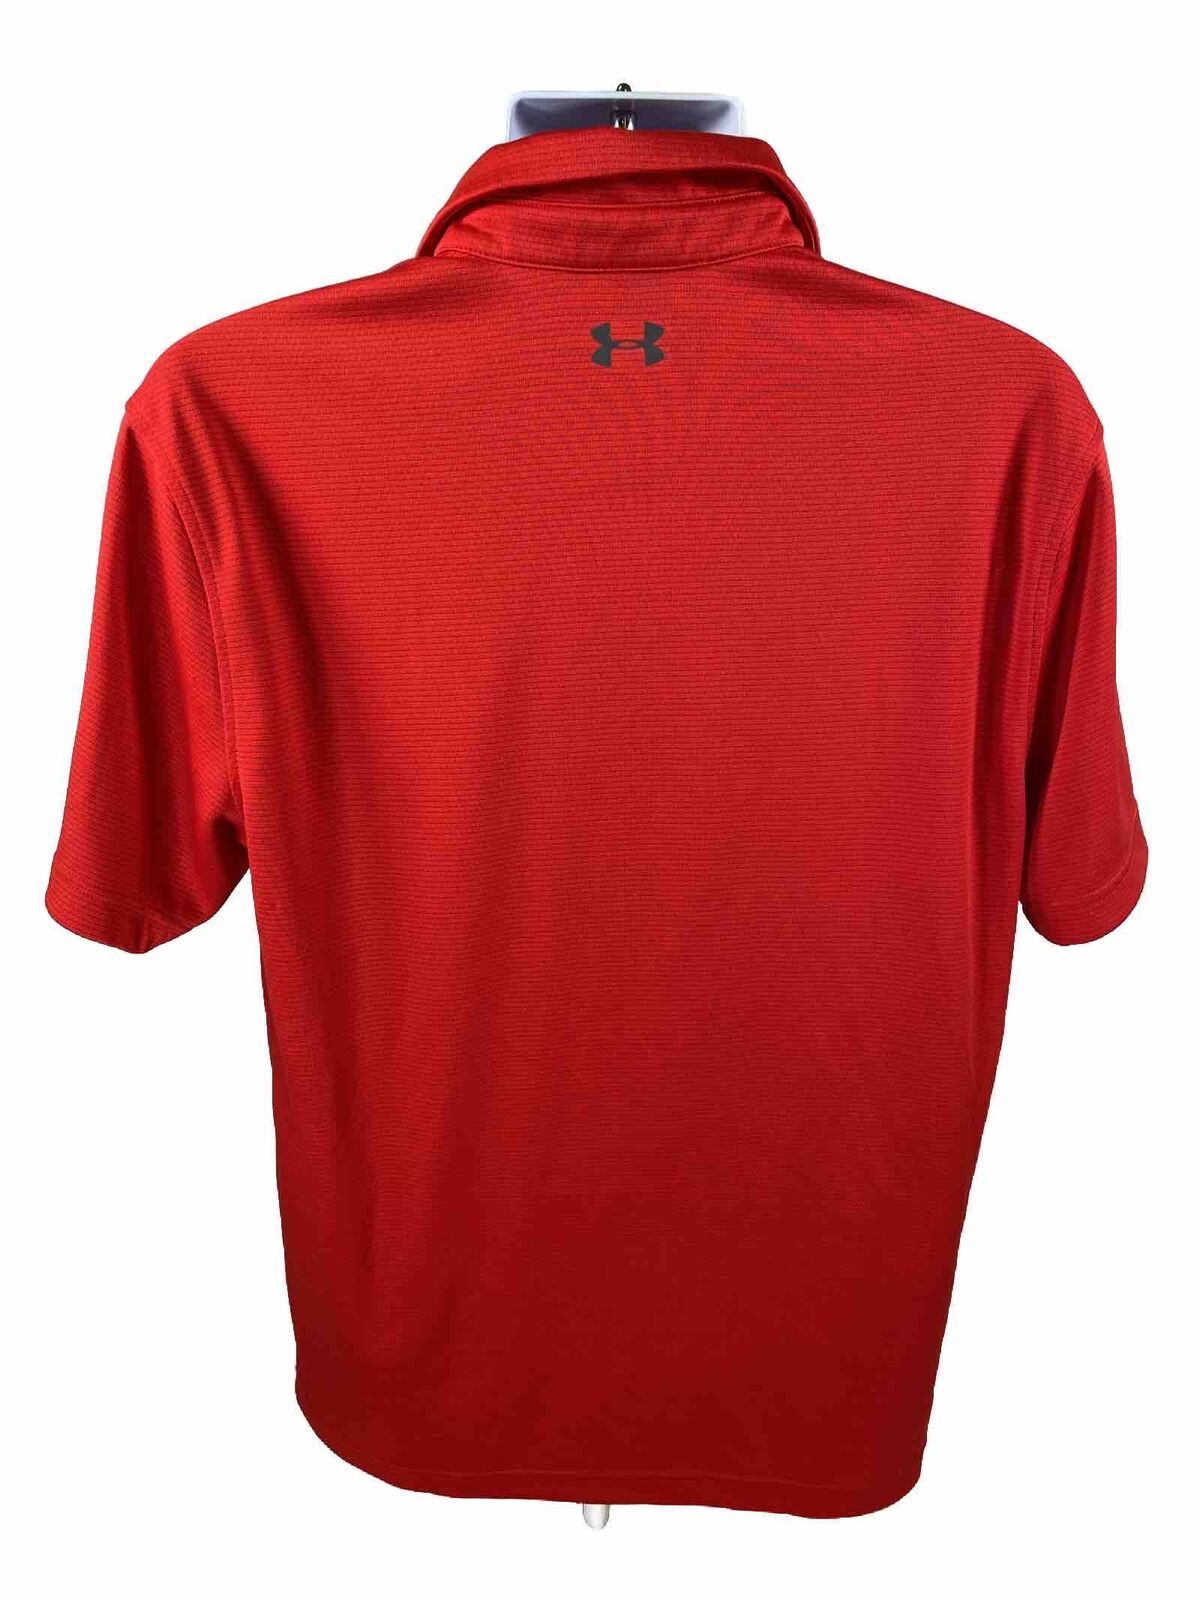 Under Armour Men's Red Short Sleeve HeatGear Polo Shirt - L